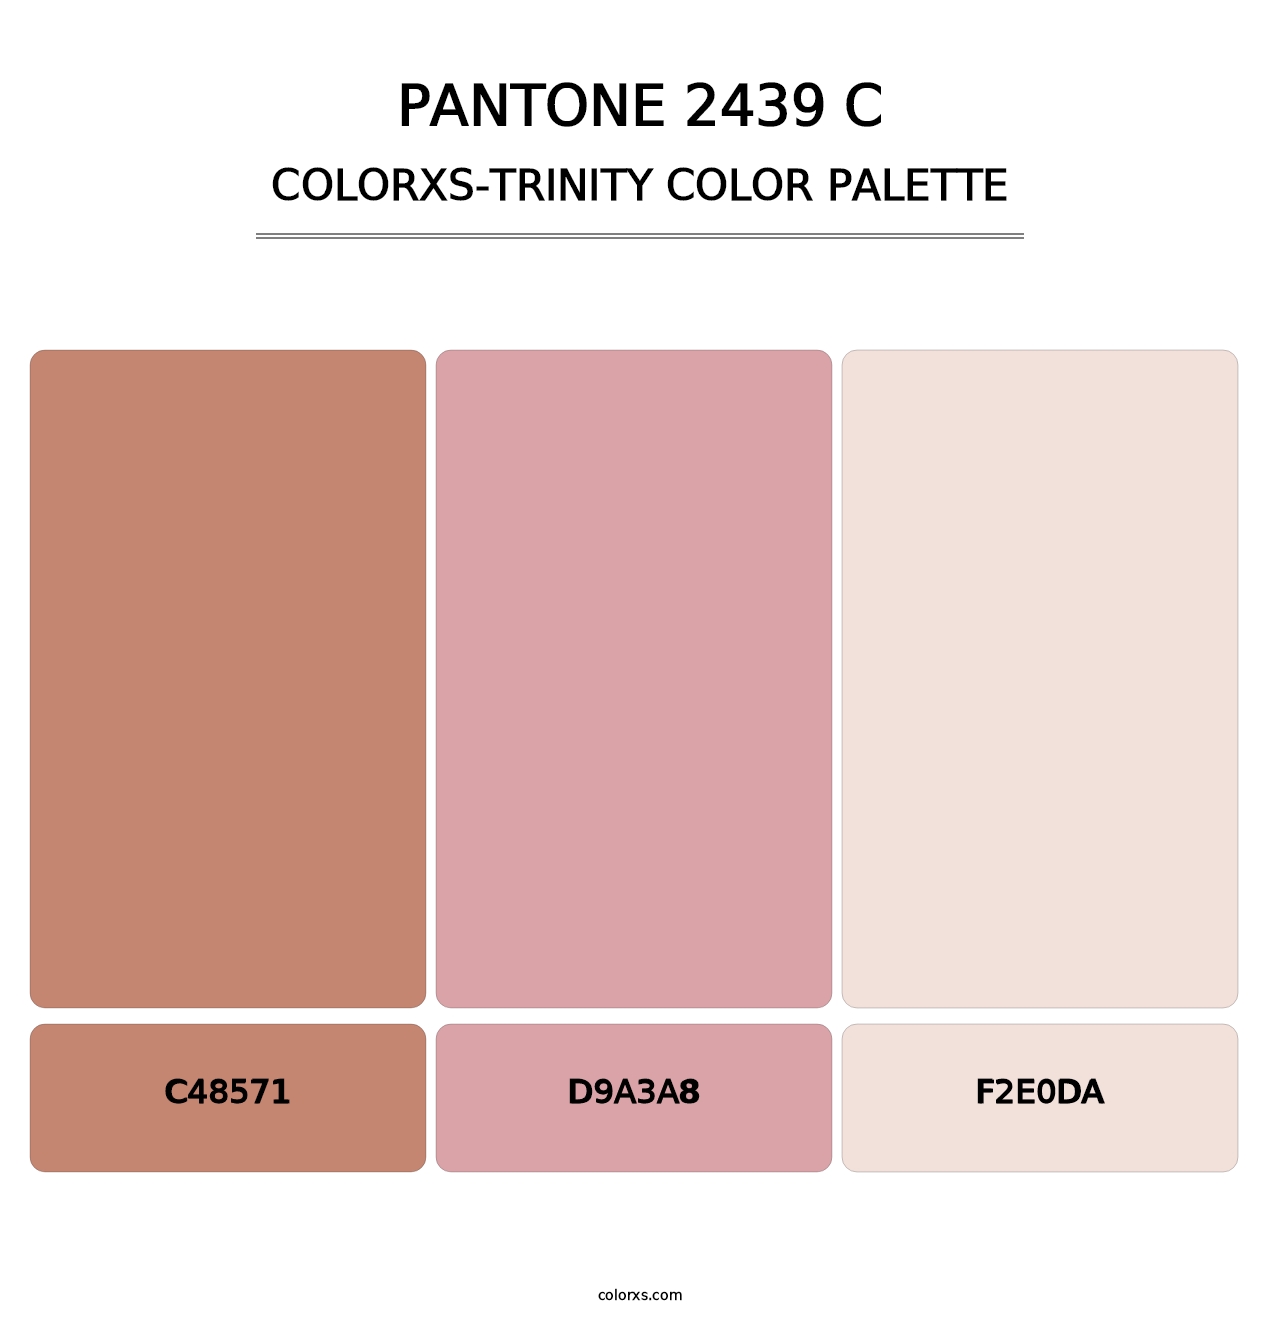 PANTONE 2439 C - Colorxs Trinity Palette